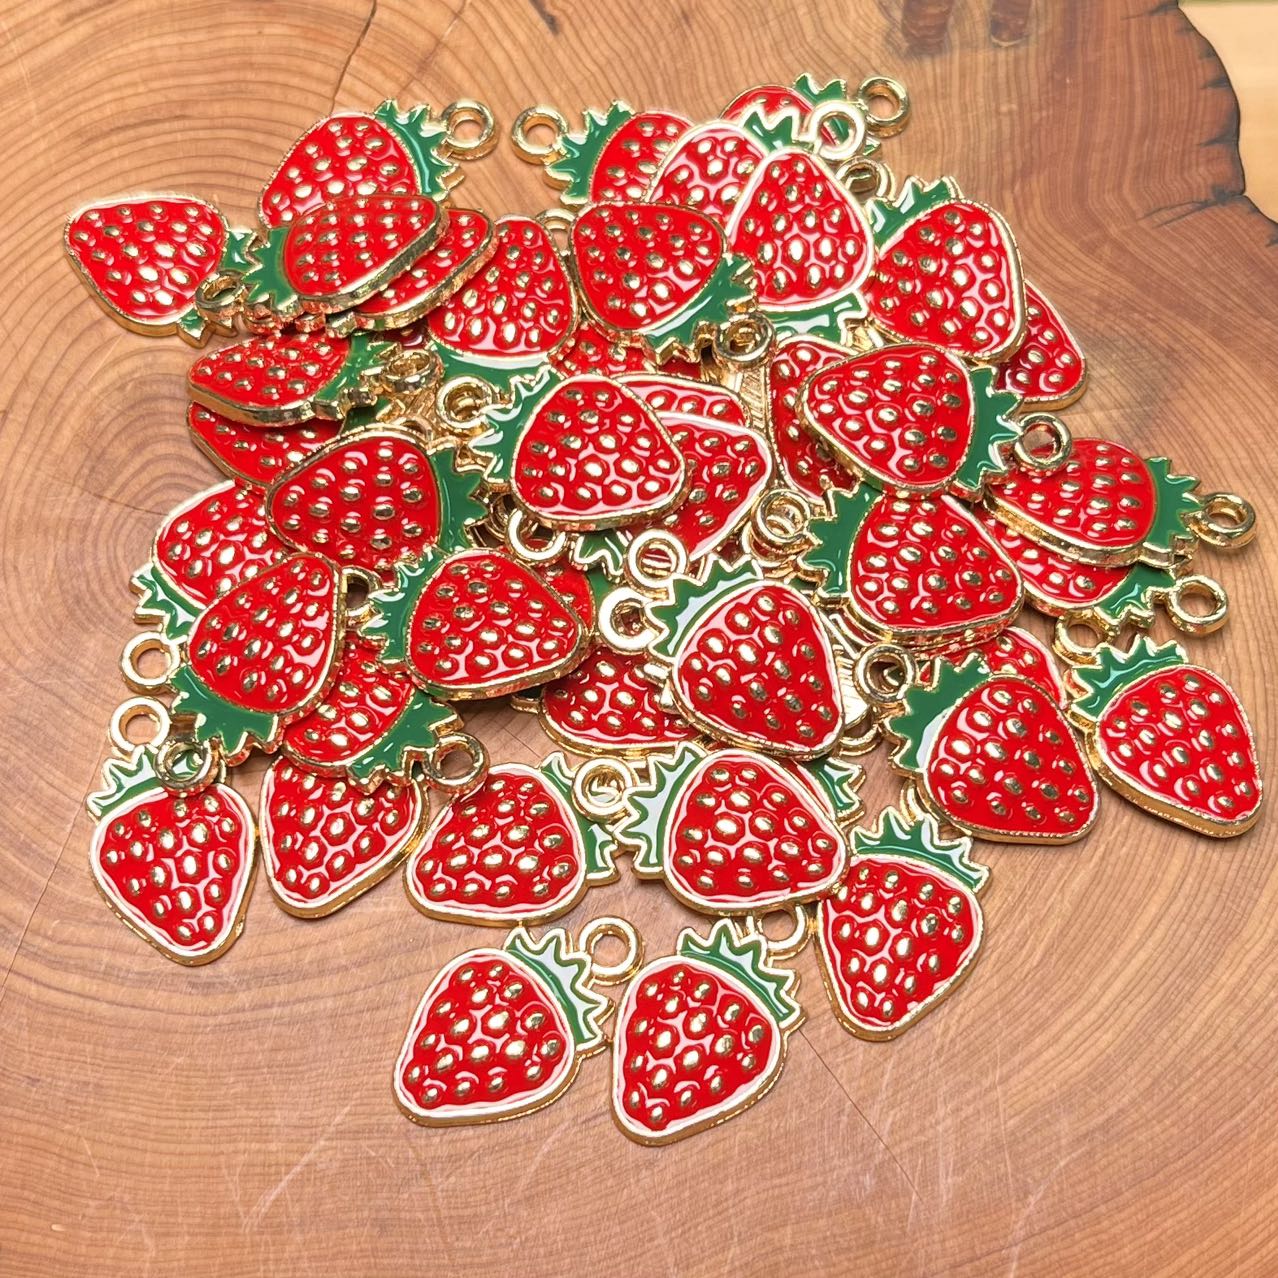 DIY Strawberry accessories 50pc